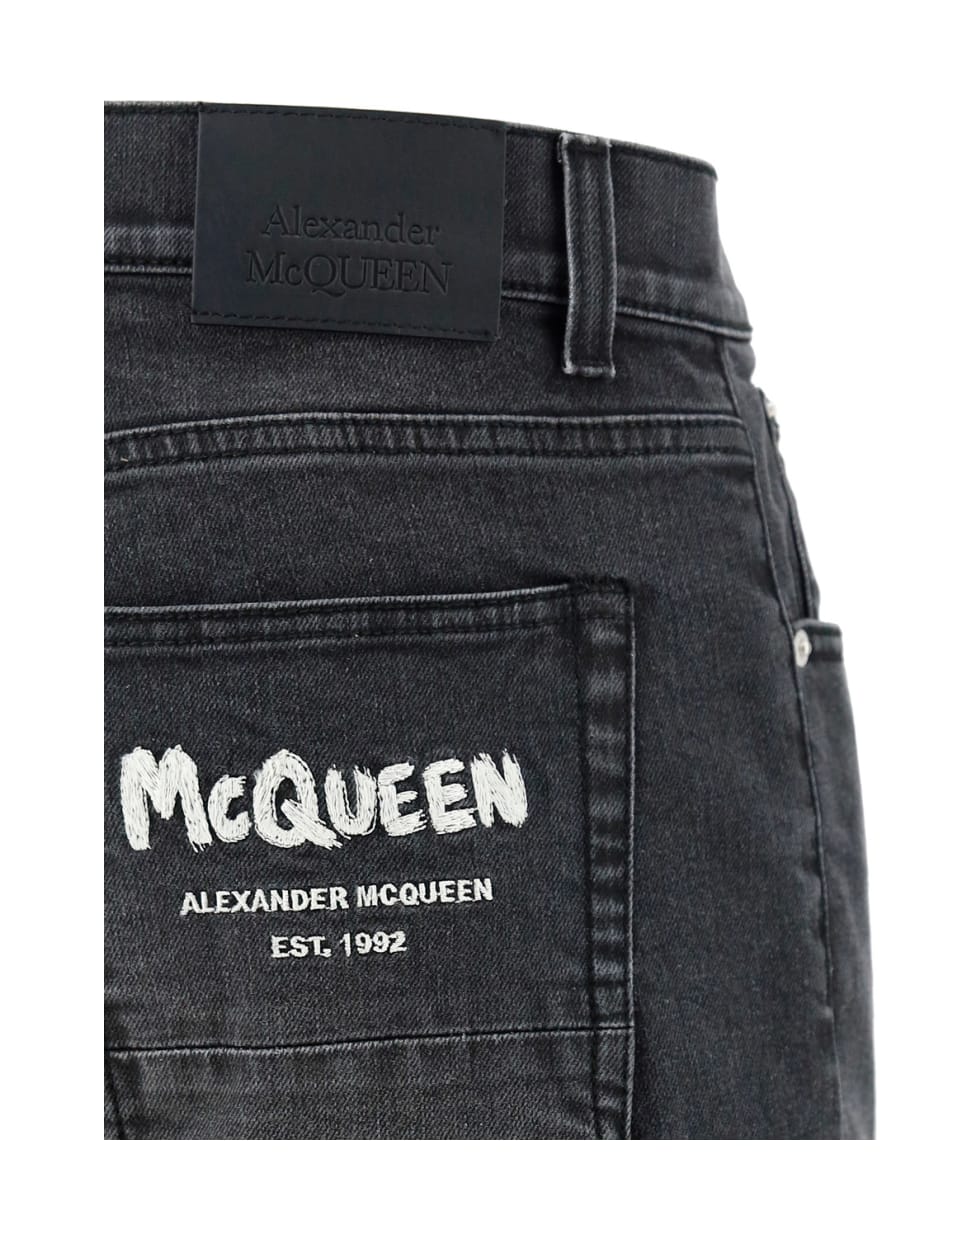 Alexander McQueen Jeans - Black washed